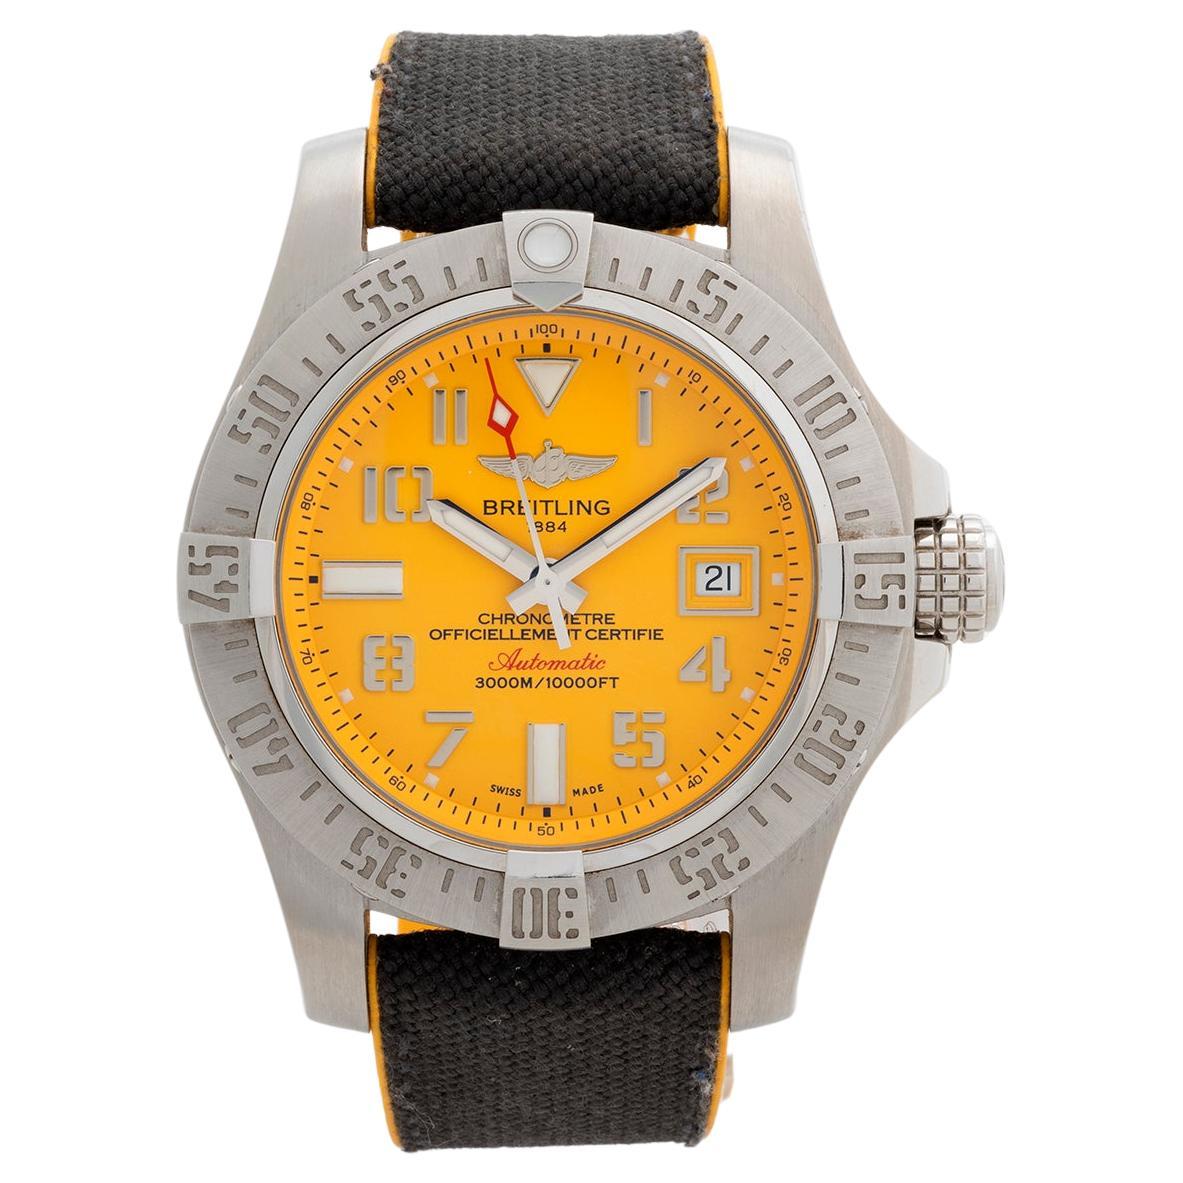 Breitling Avenger II Seawolf Wristwatch Ref A1733110. 45mm Case, Complete Set.